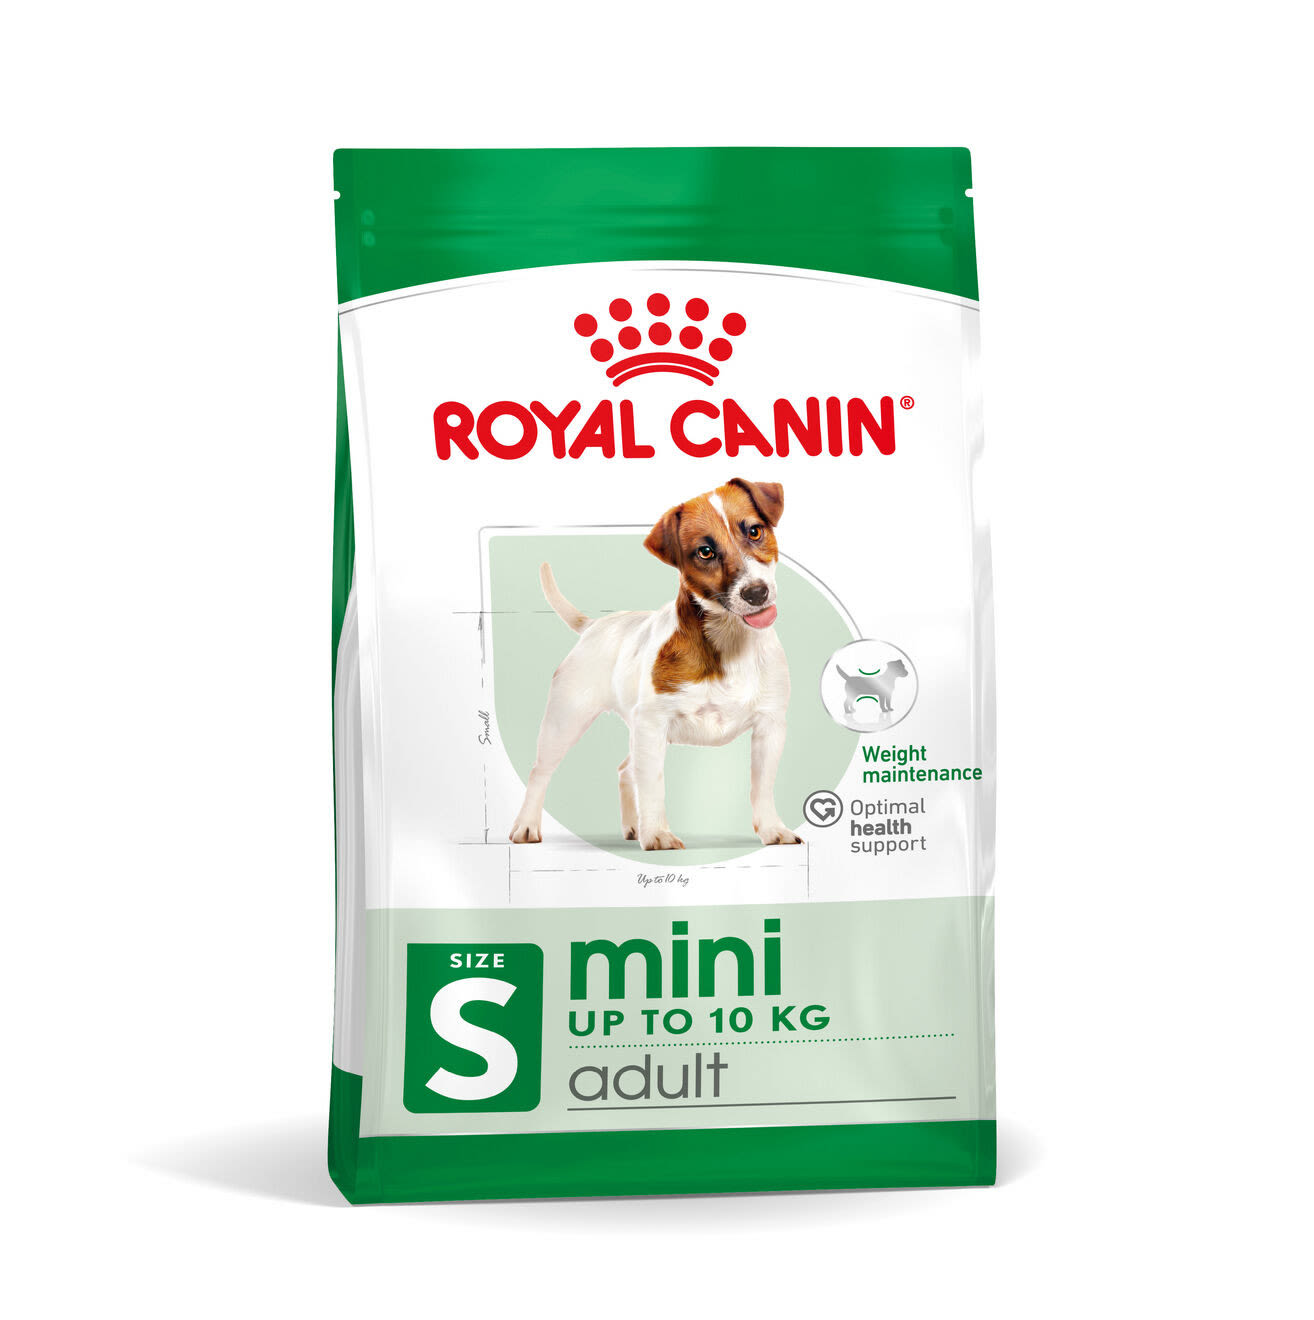 adult small dog royal canin